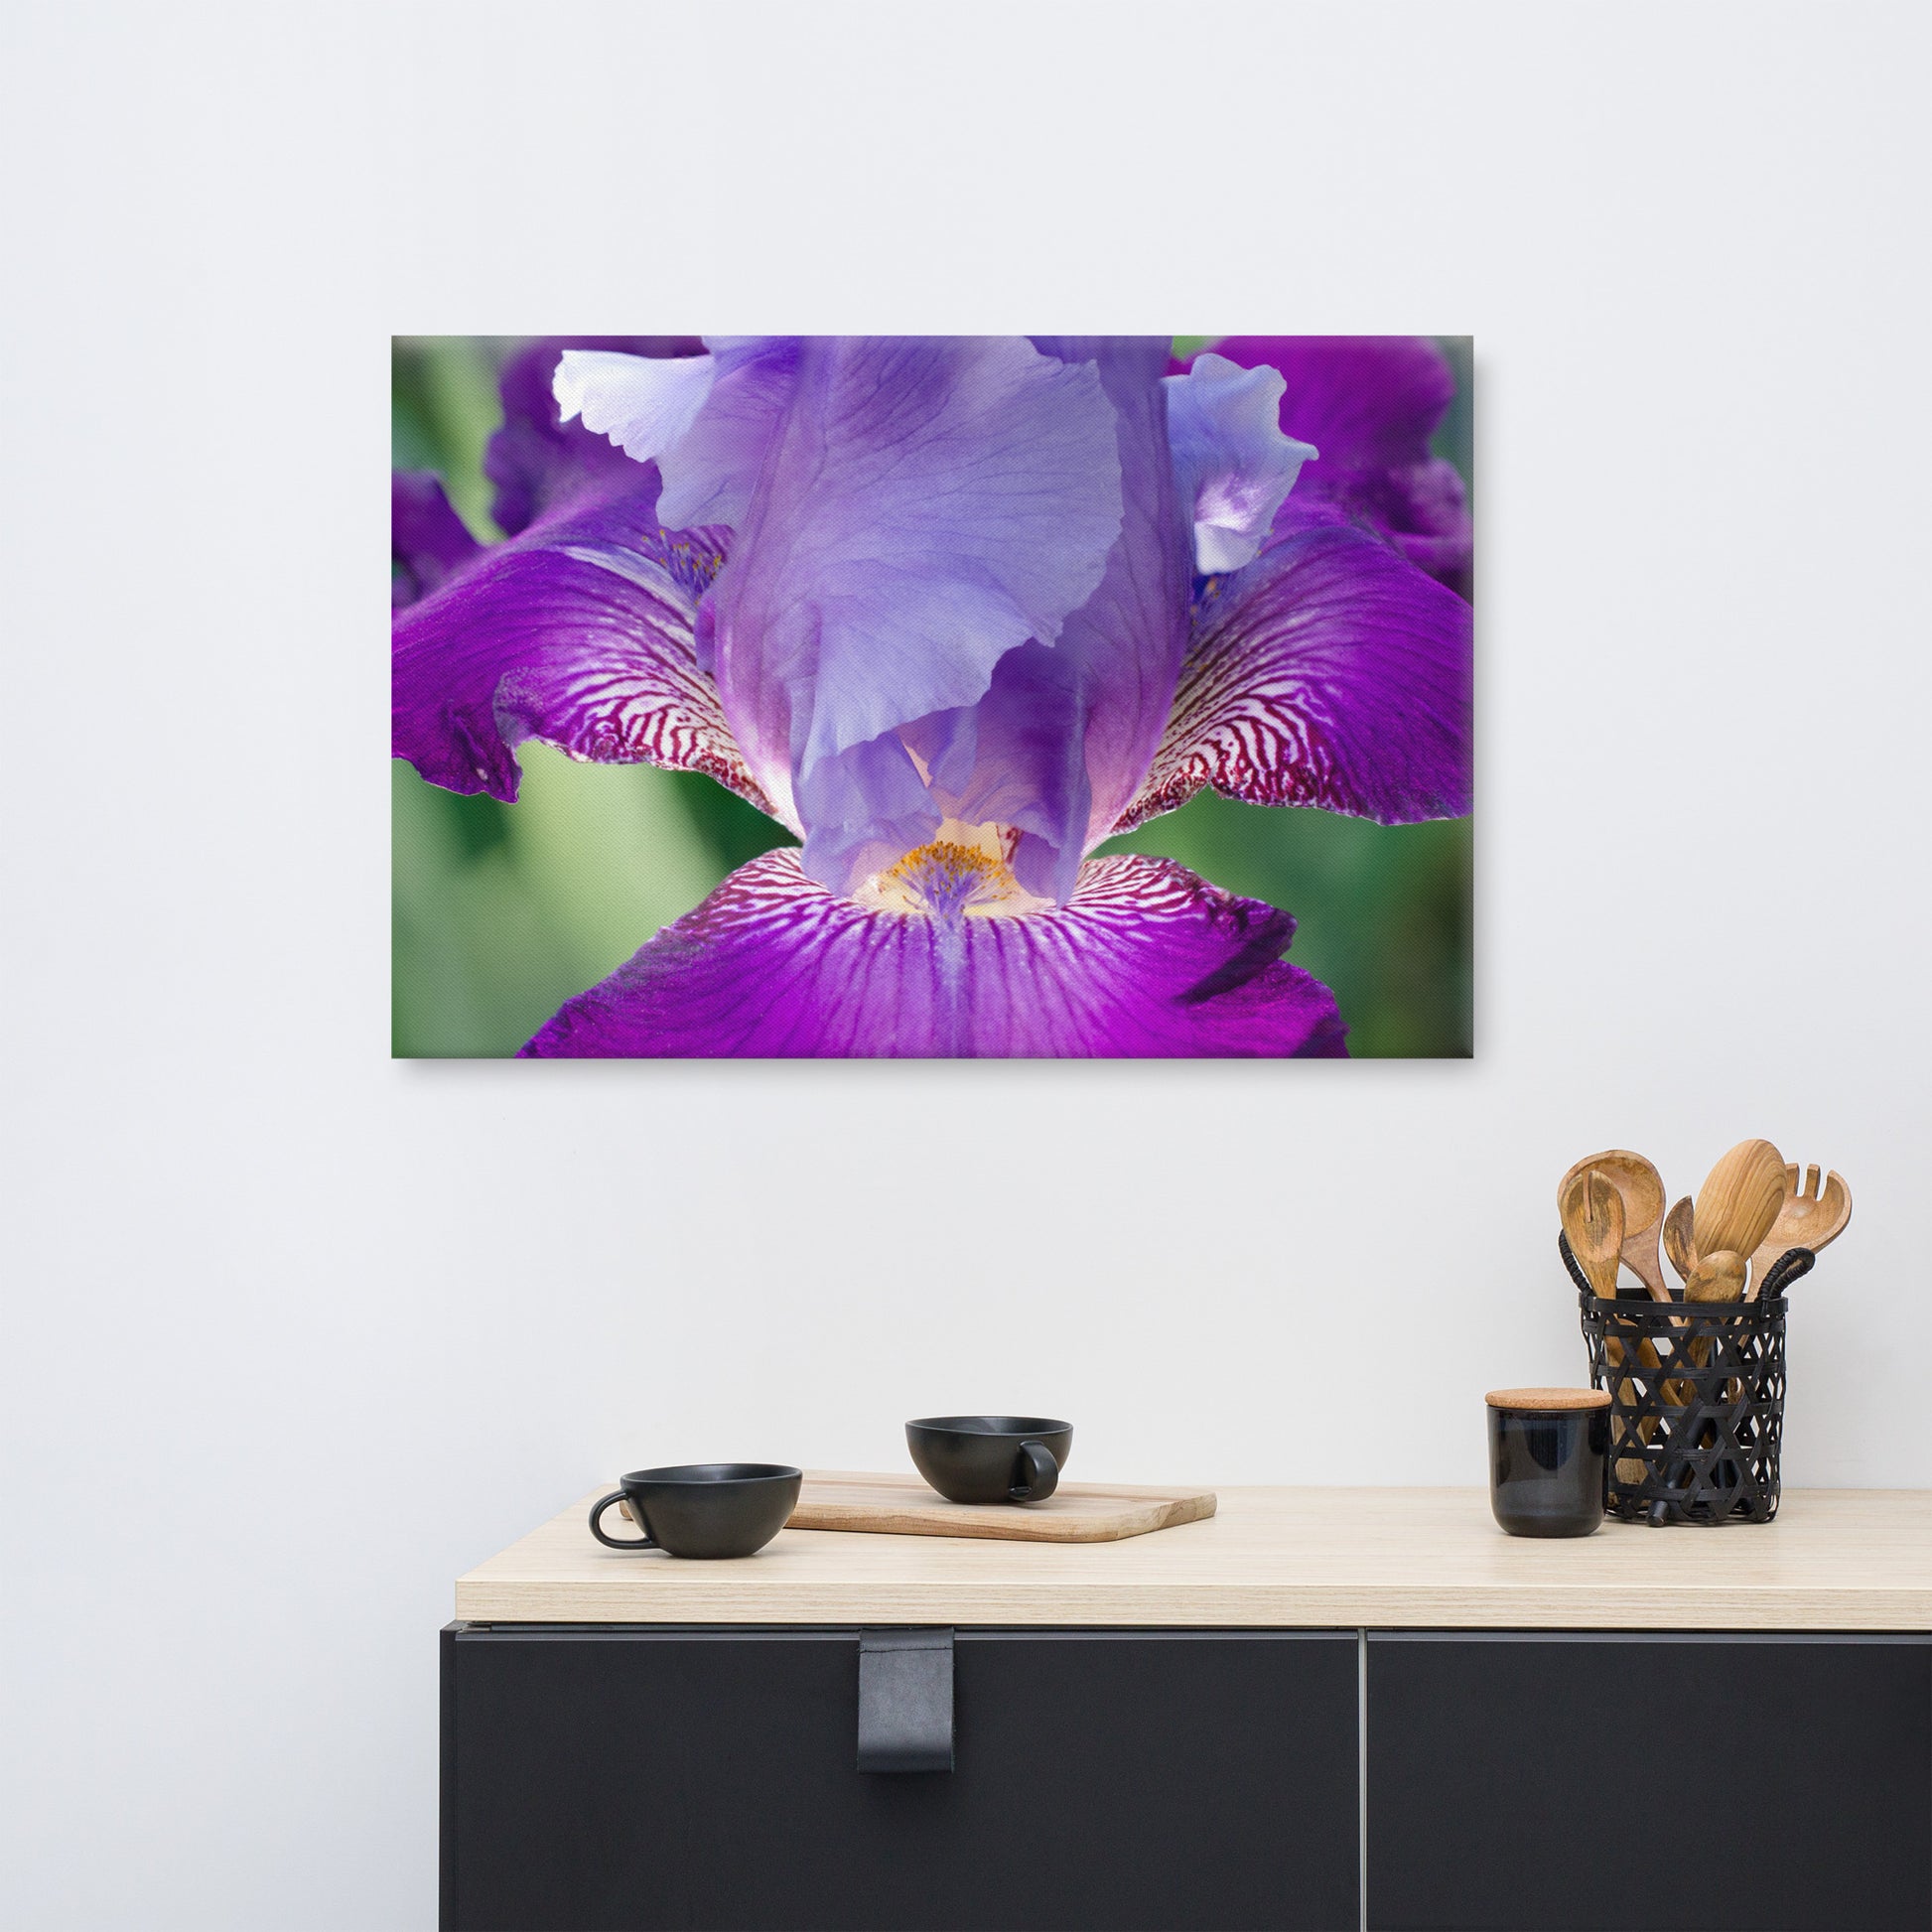 Purple Bedroom Art: Glowing Iris - Botanical / Floral / Flora / Flowers / Nature Photograph Canvas Wall Art Print - Artwork